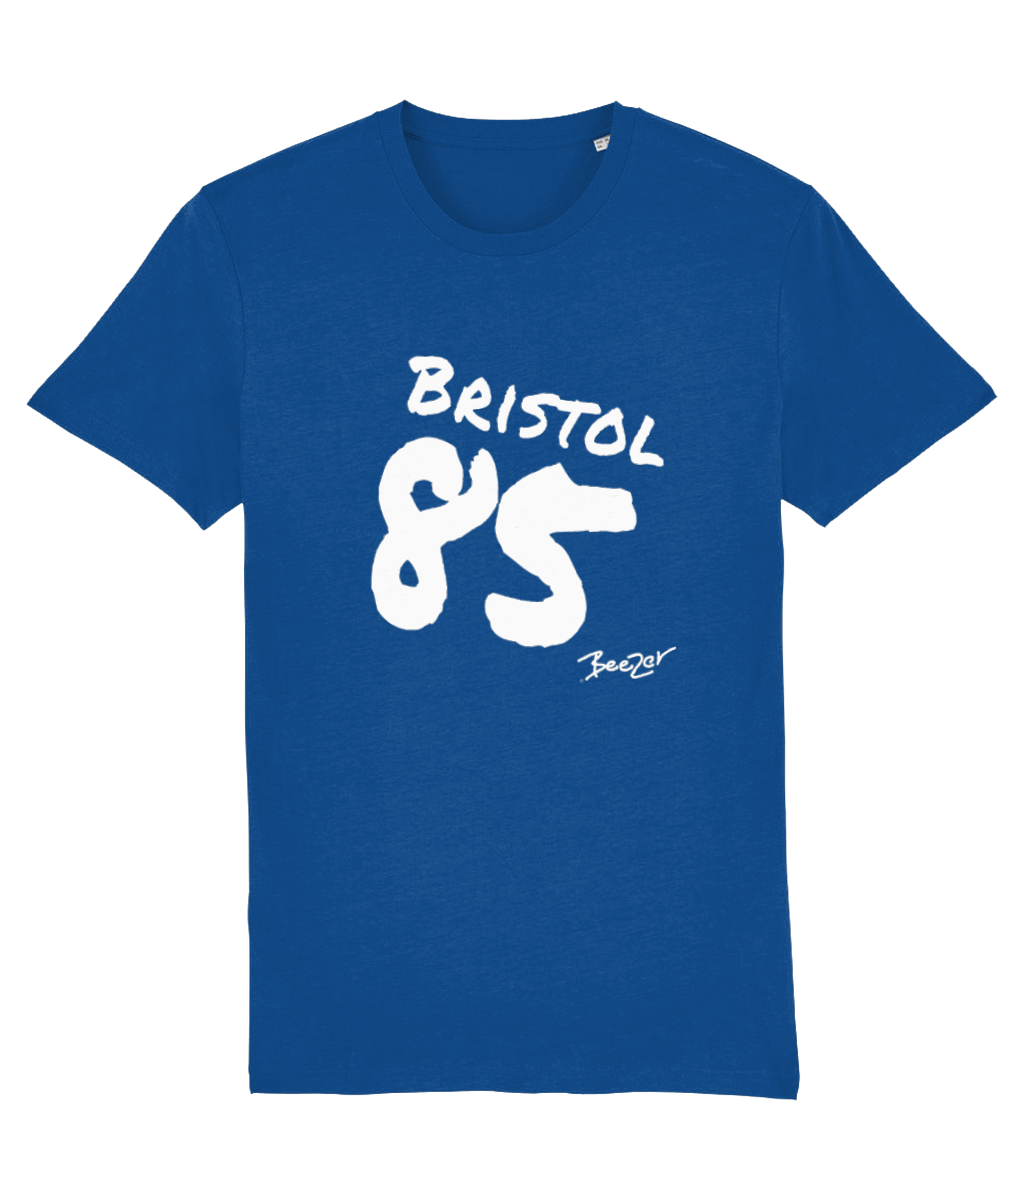 Bristol 85 T-shirt